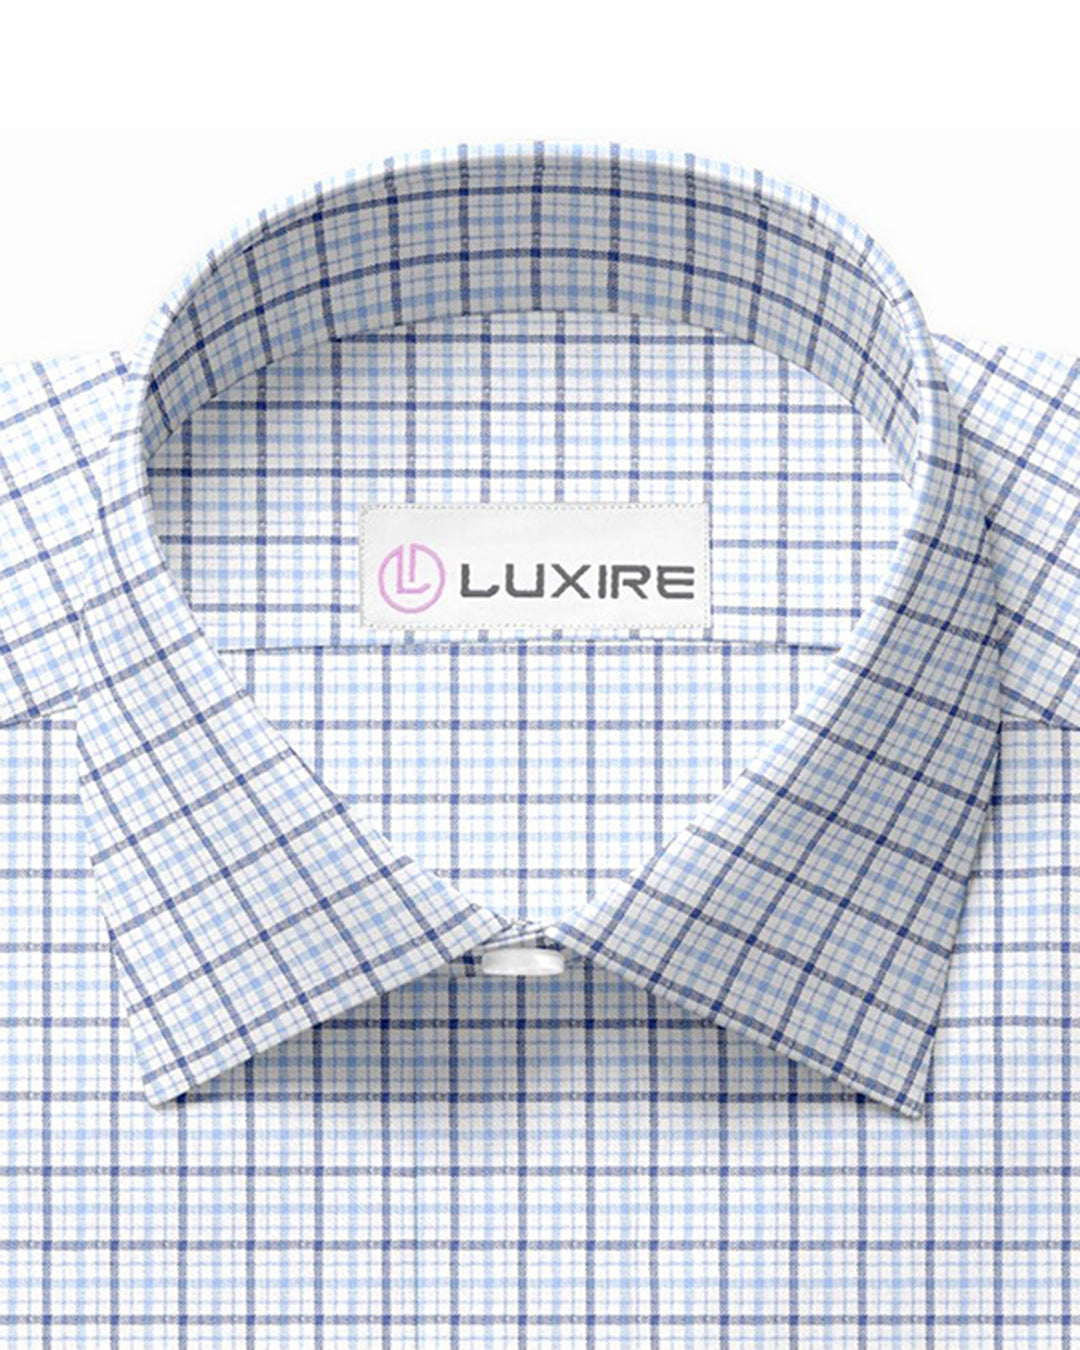 Collar of custom linen shirt for men in shades of blue tattersall